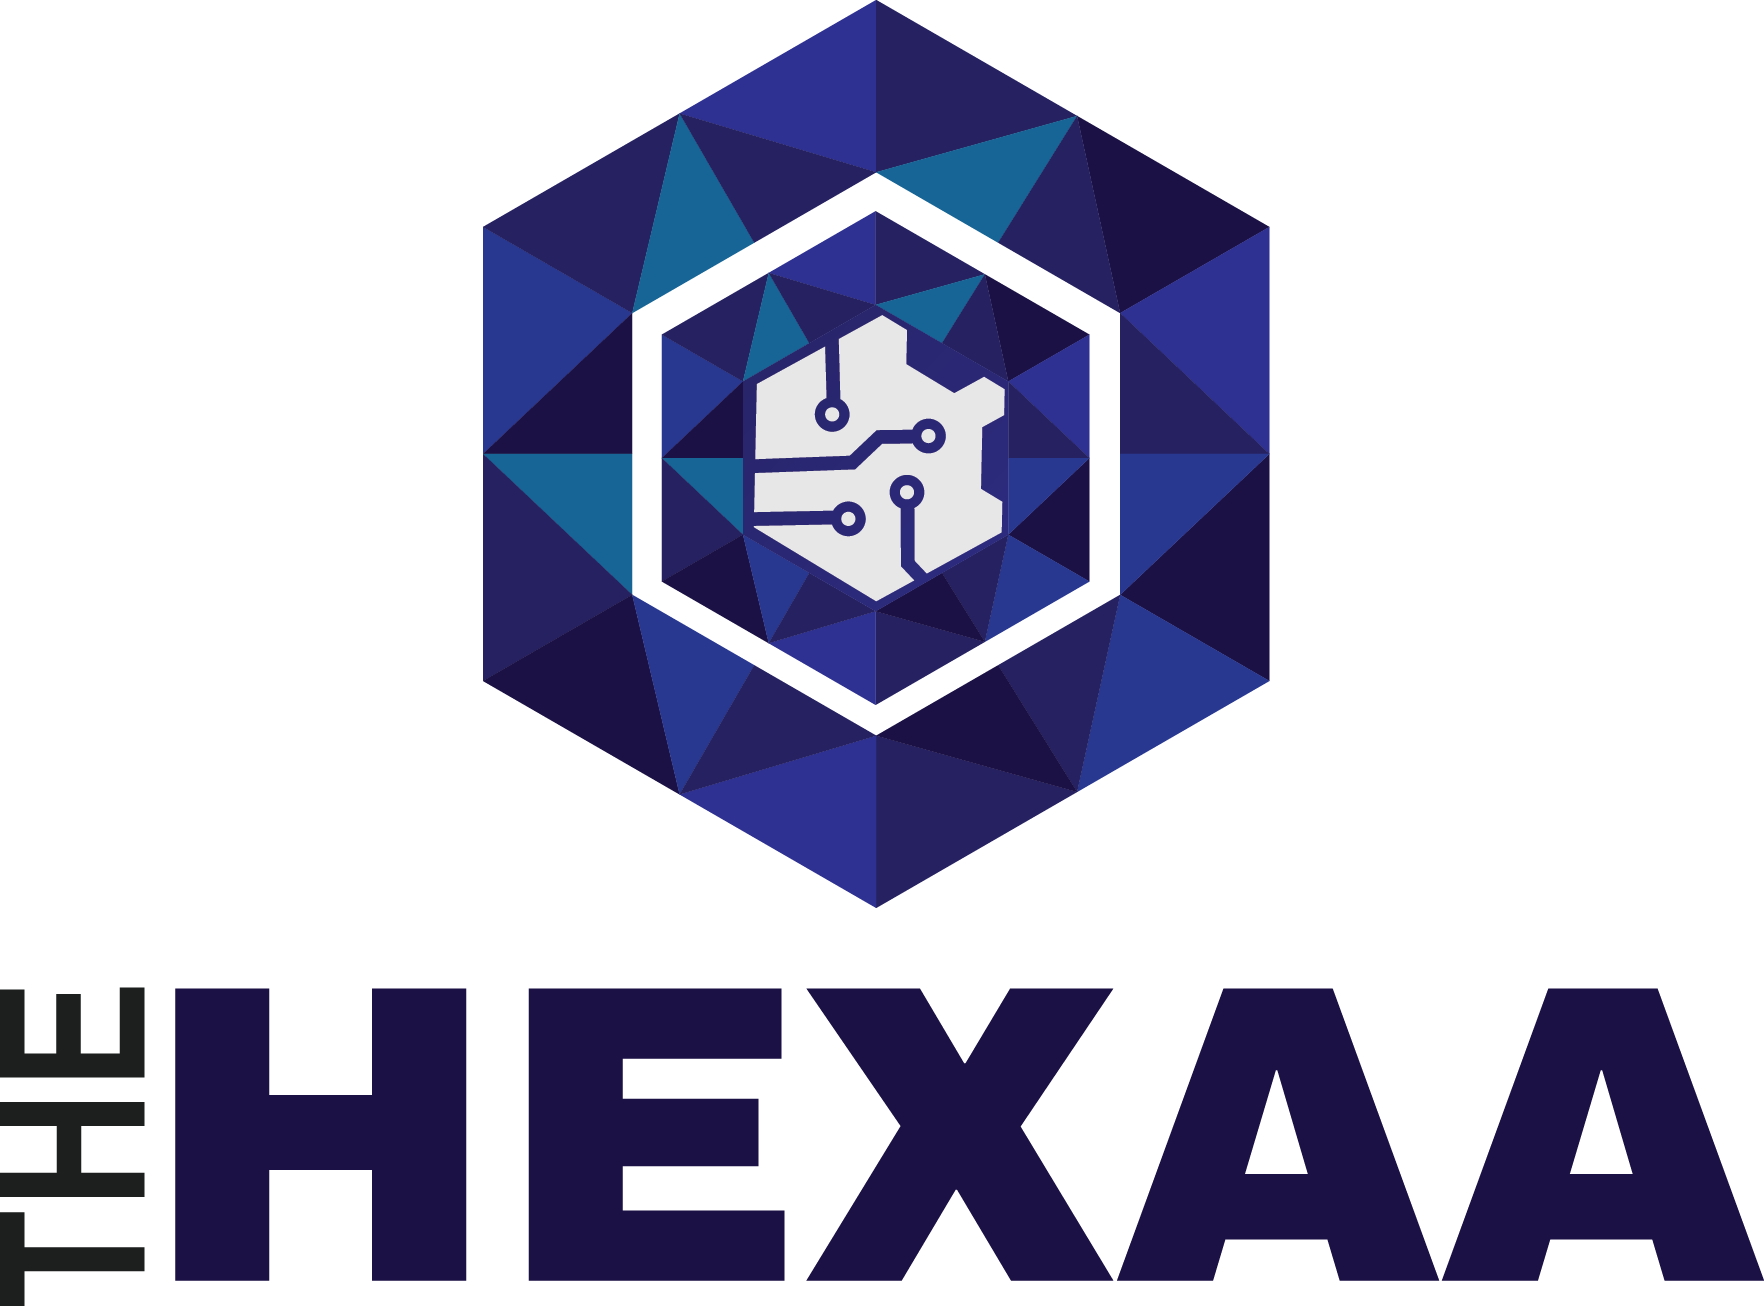 The HEXAA logov1.0